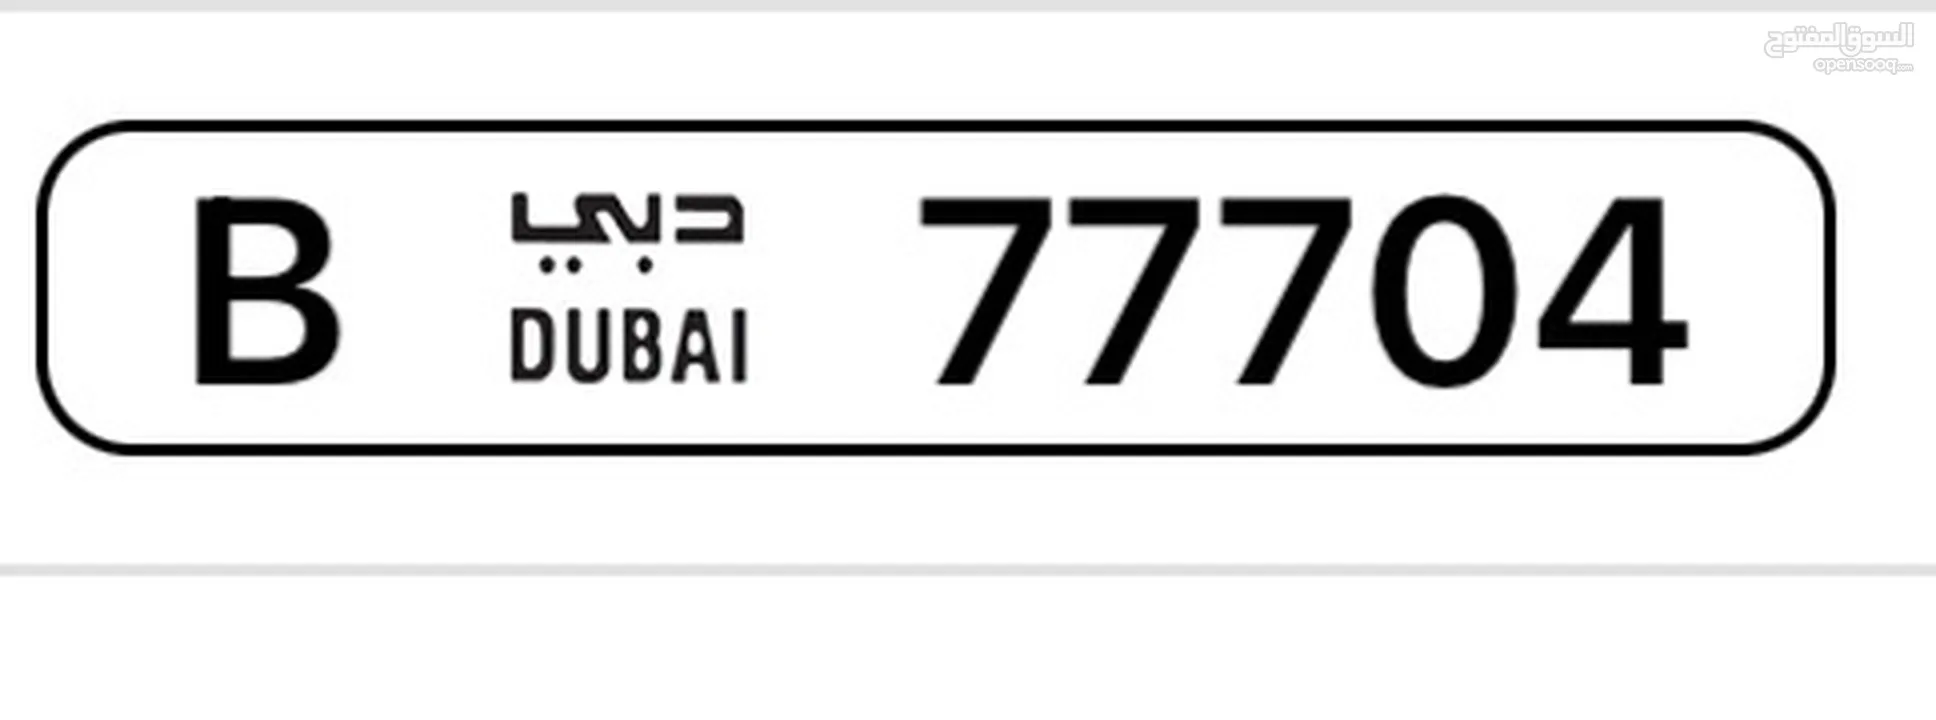 B 77704 Dubai